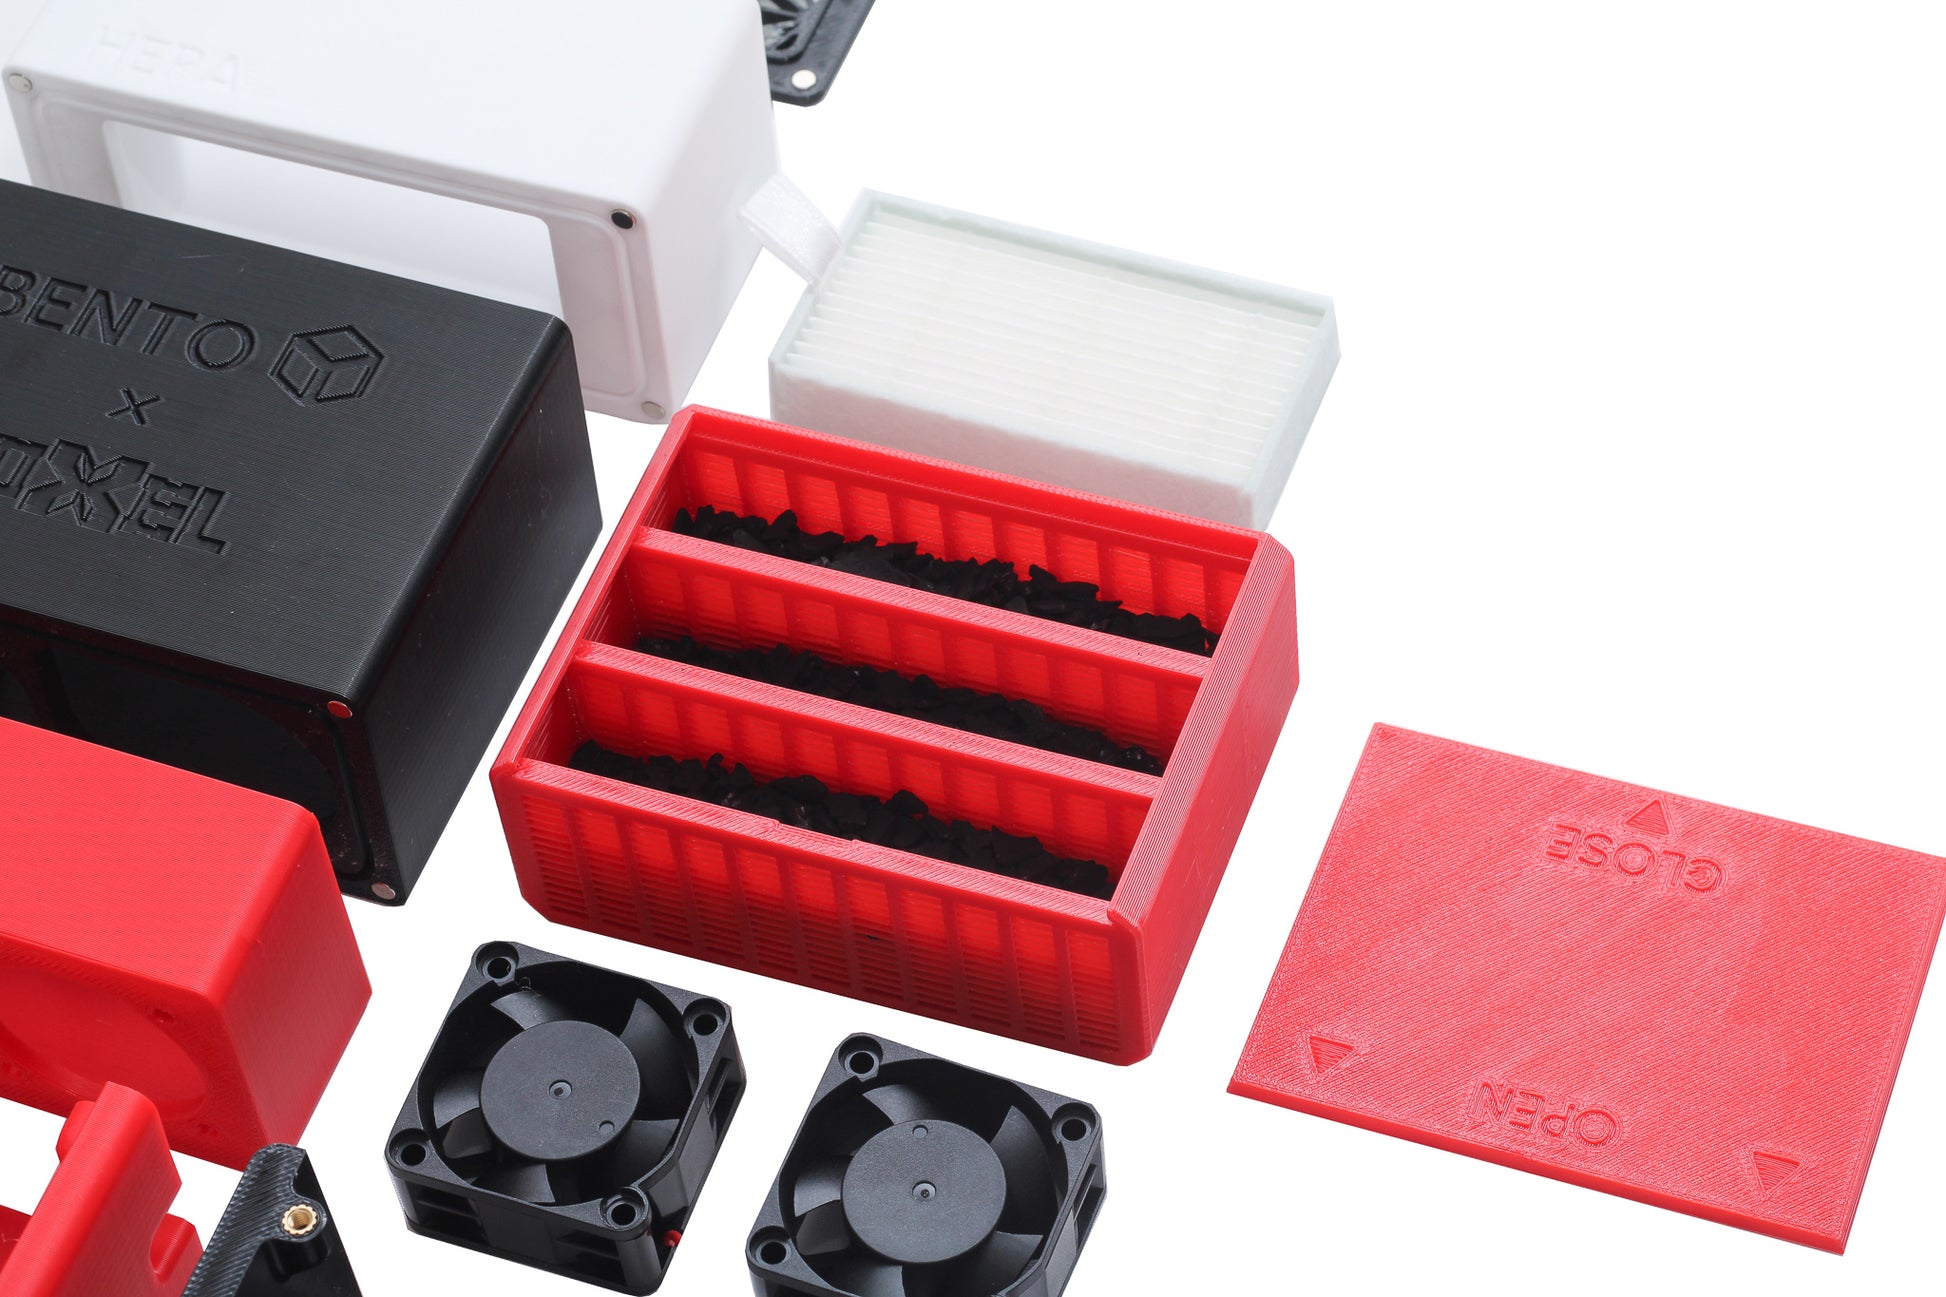 VOXELPETG PETG Plus Black Filament - $16.99 1.75mm for FDM 3D Printer –  VOXELPLA